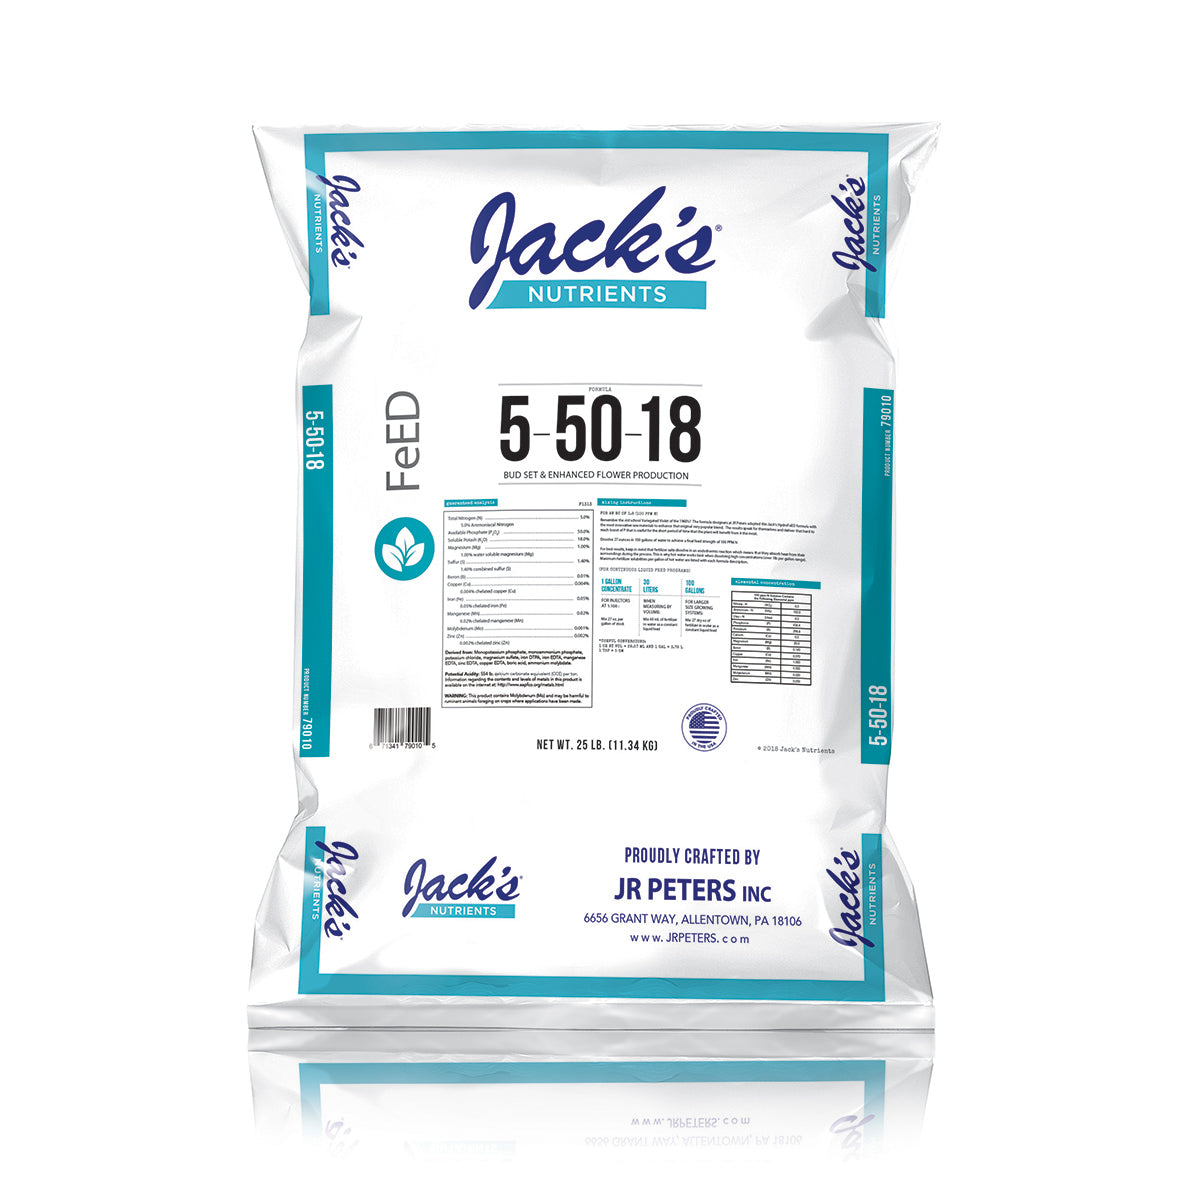 Product Secondary Image:Jack's Nutriments (5-50-18) Ultraviolet